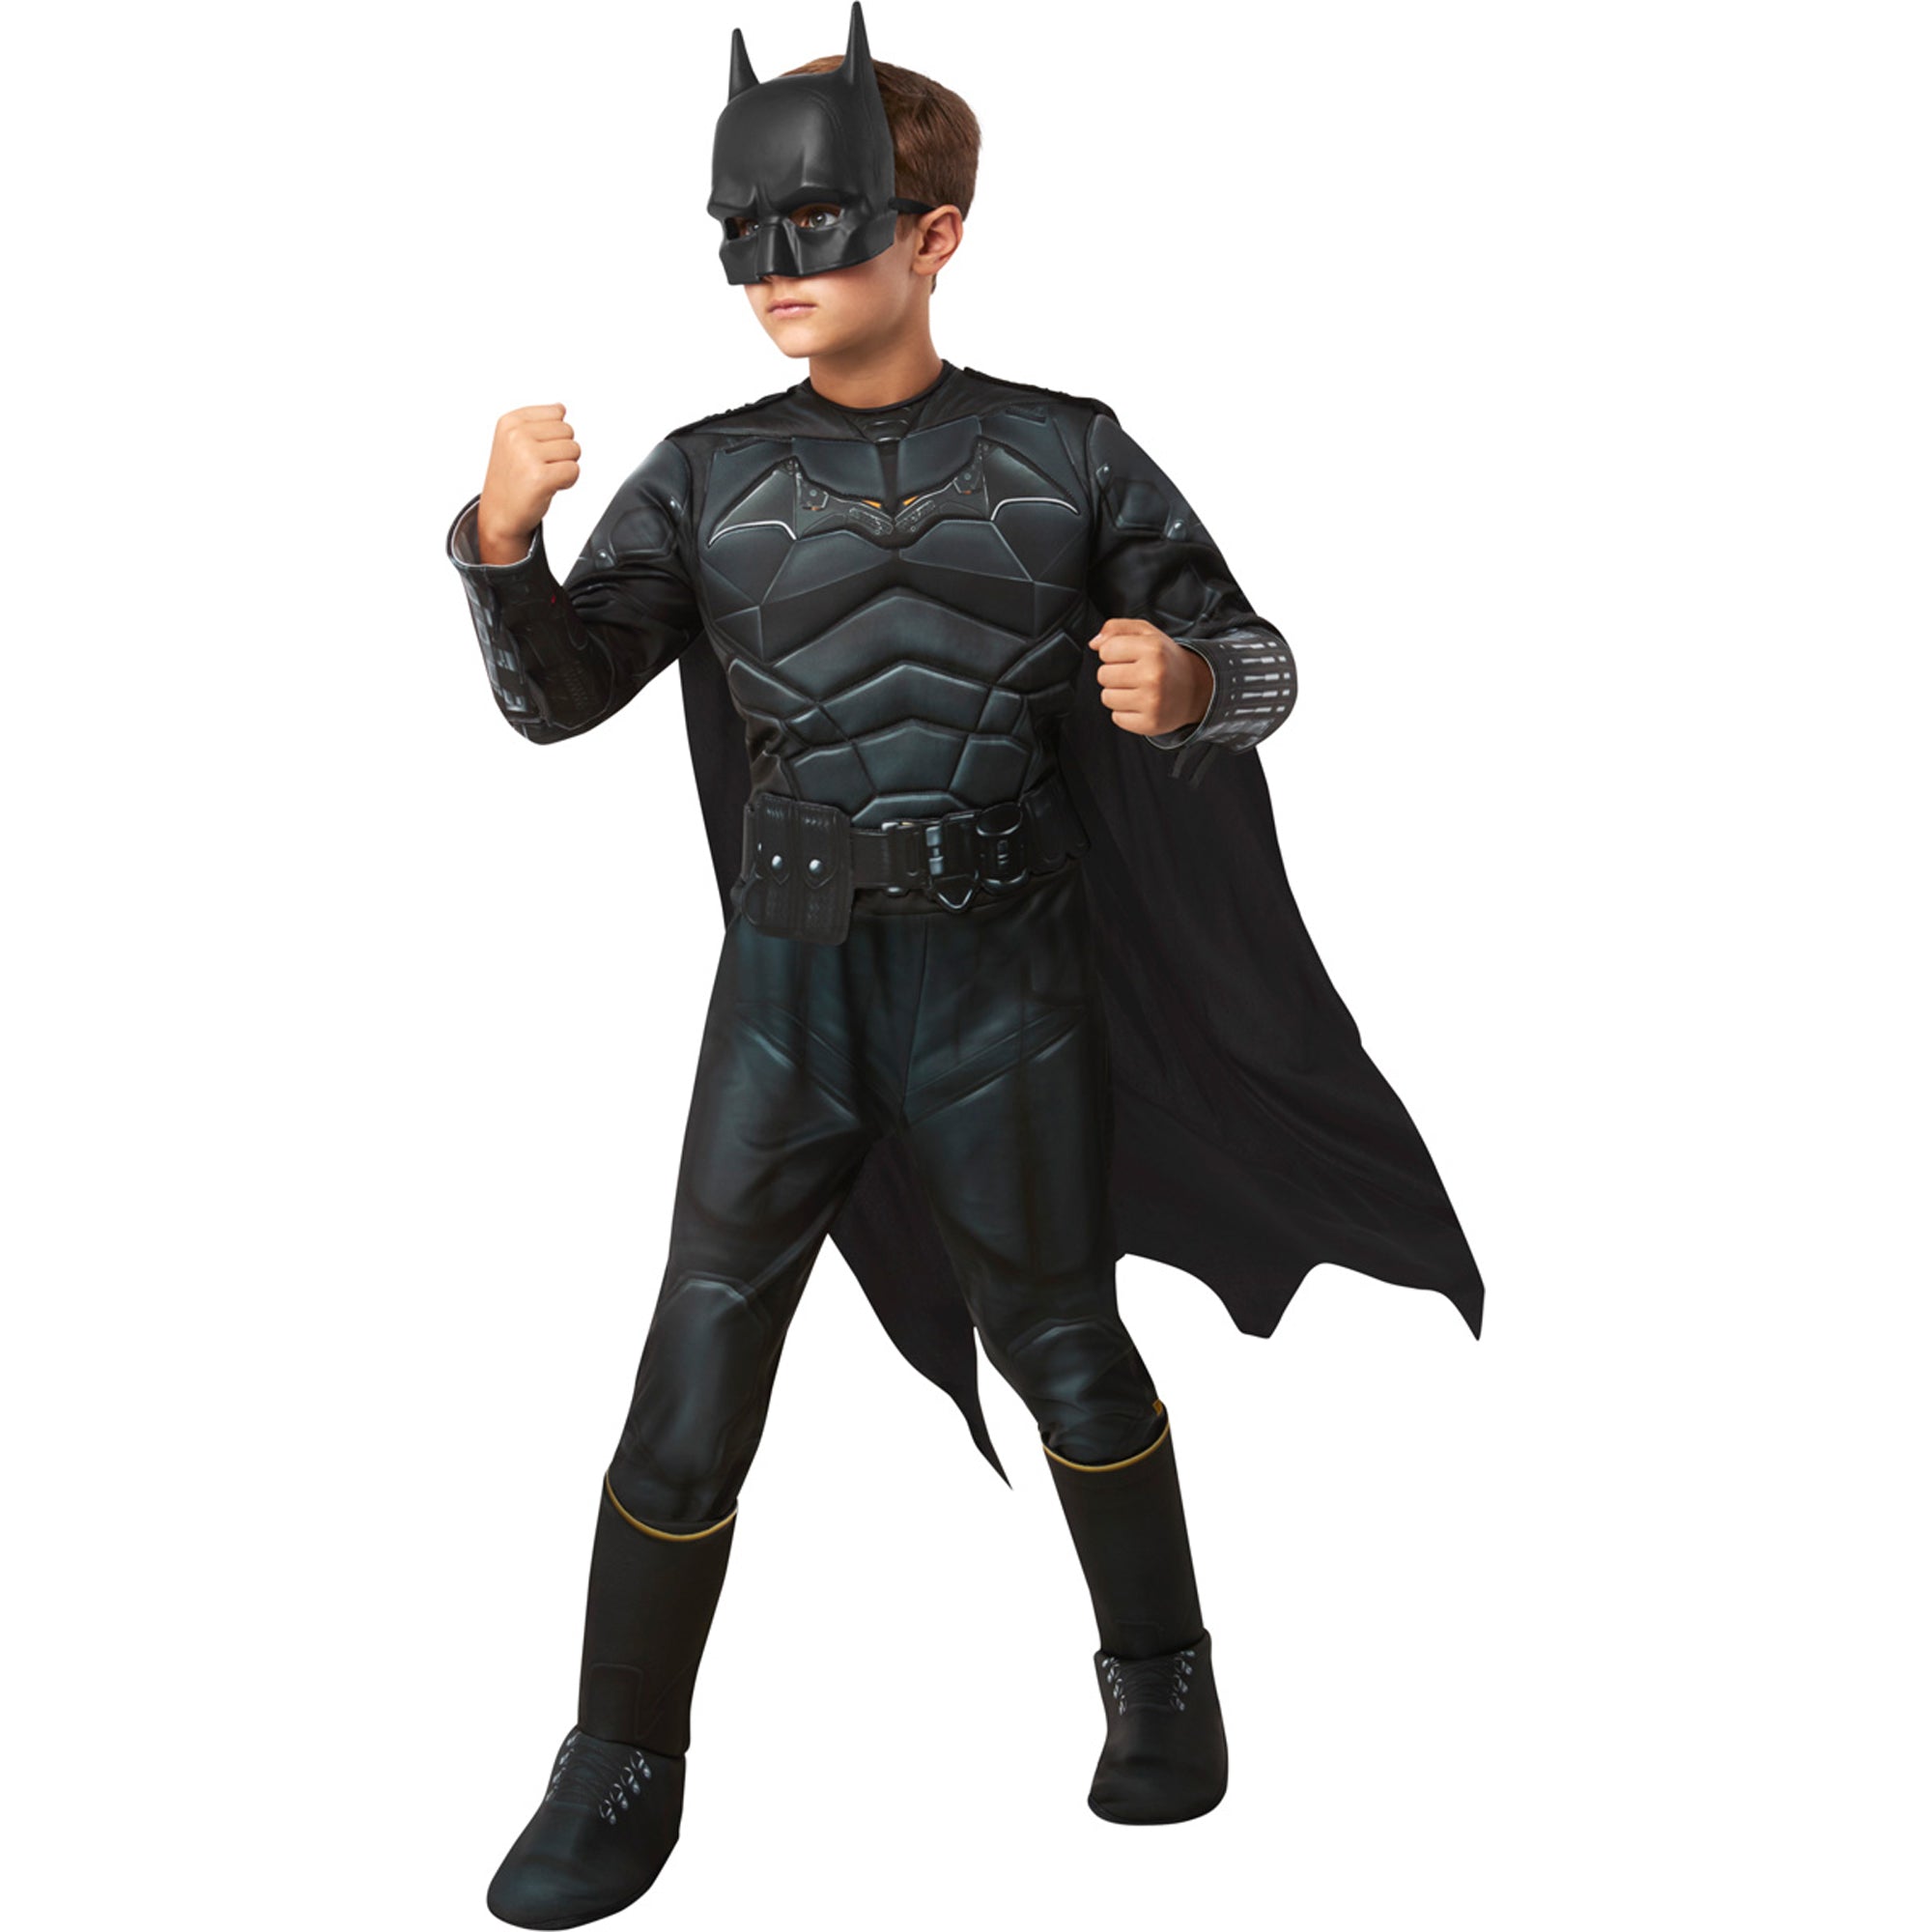 DC Comics Batman Deluxe Costume for Kids, Black Padded Jumpsuit with Detachable Cape